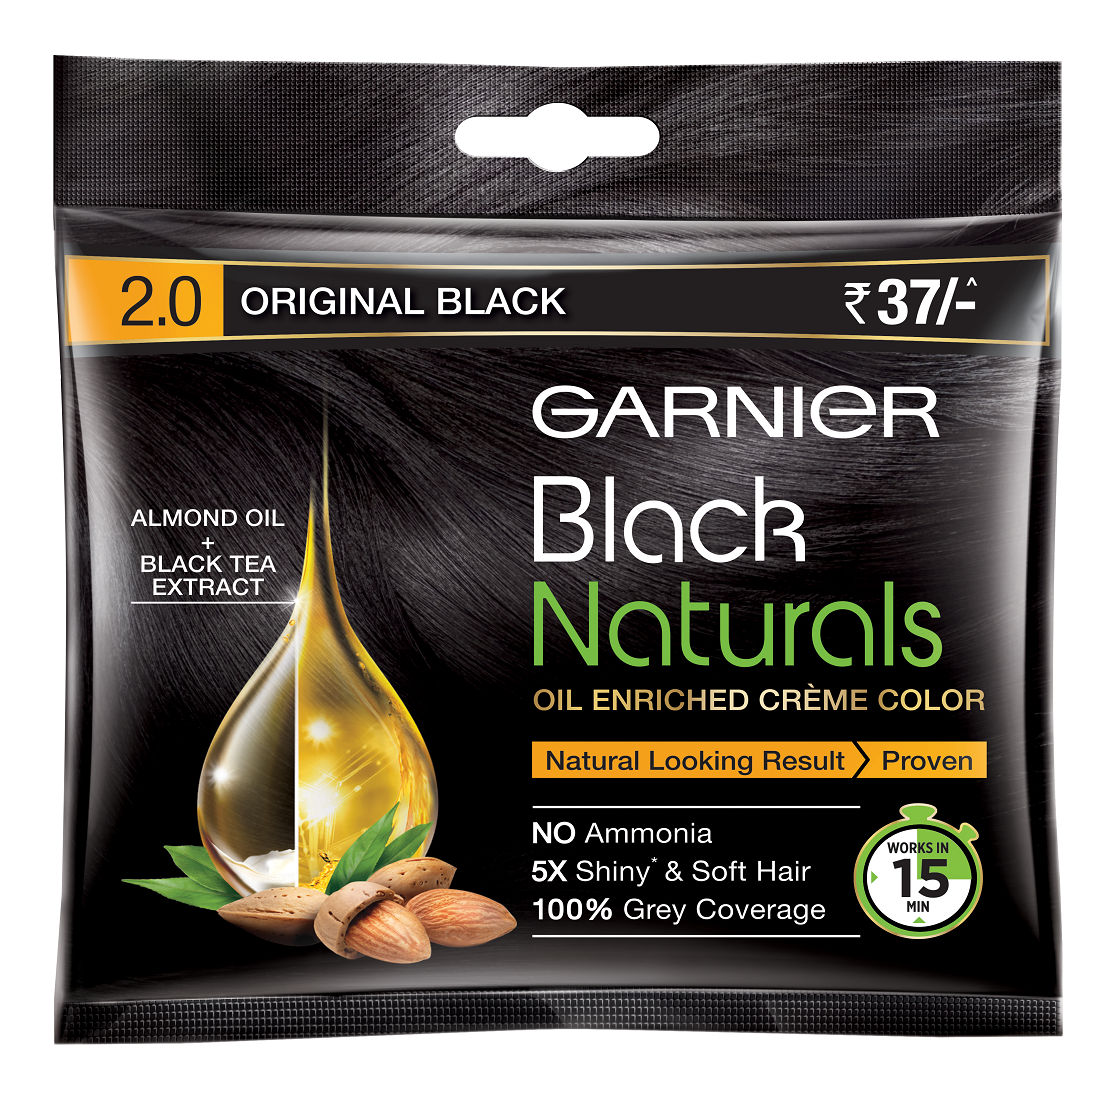 Buy Garnier Black Naturals, Shade 2 Original Black Online